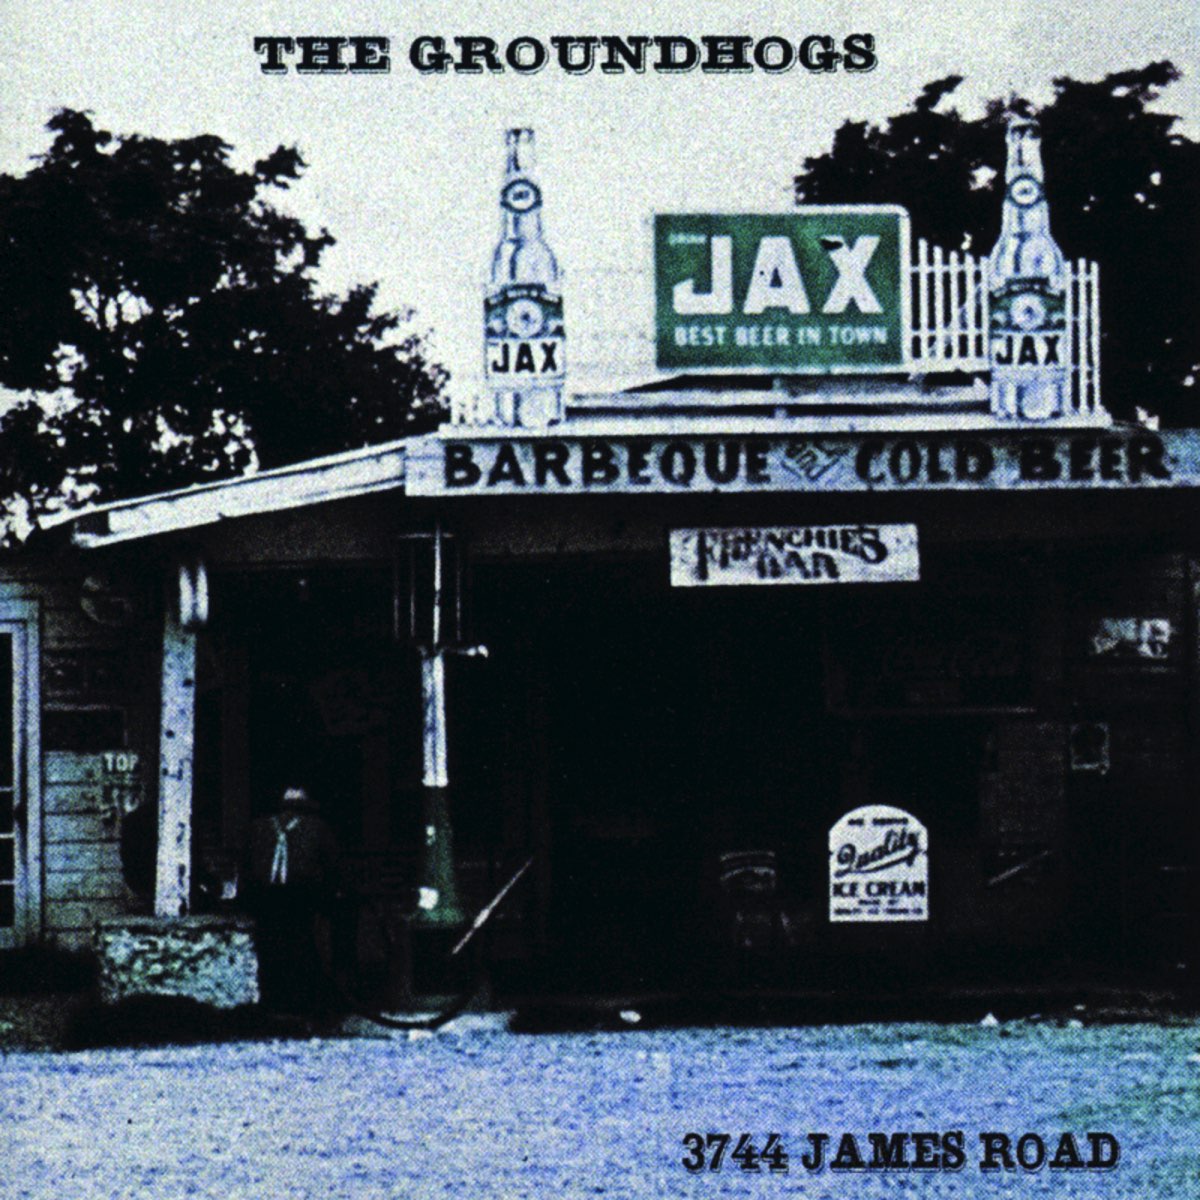 James road. Groundhogs 2001 - 3744 James Road. Groundhog. The Groundhogs Band. The Groundhogs Split.